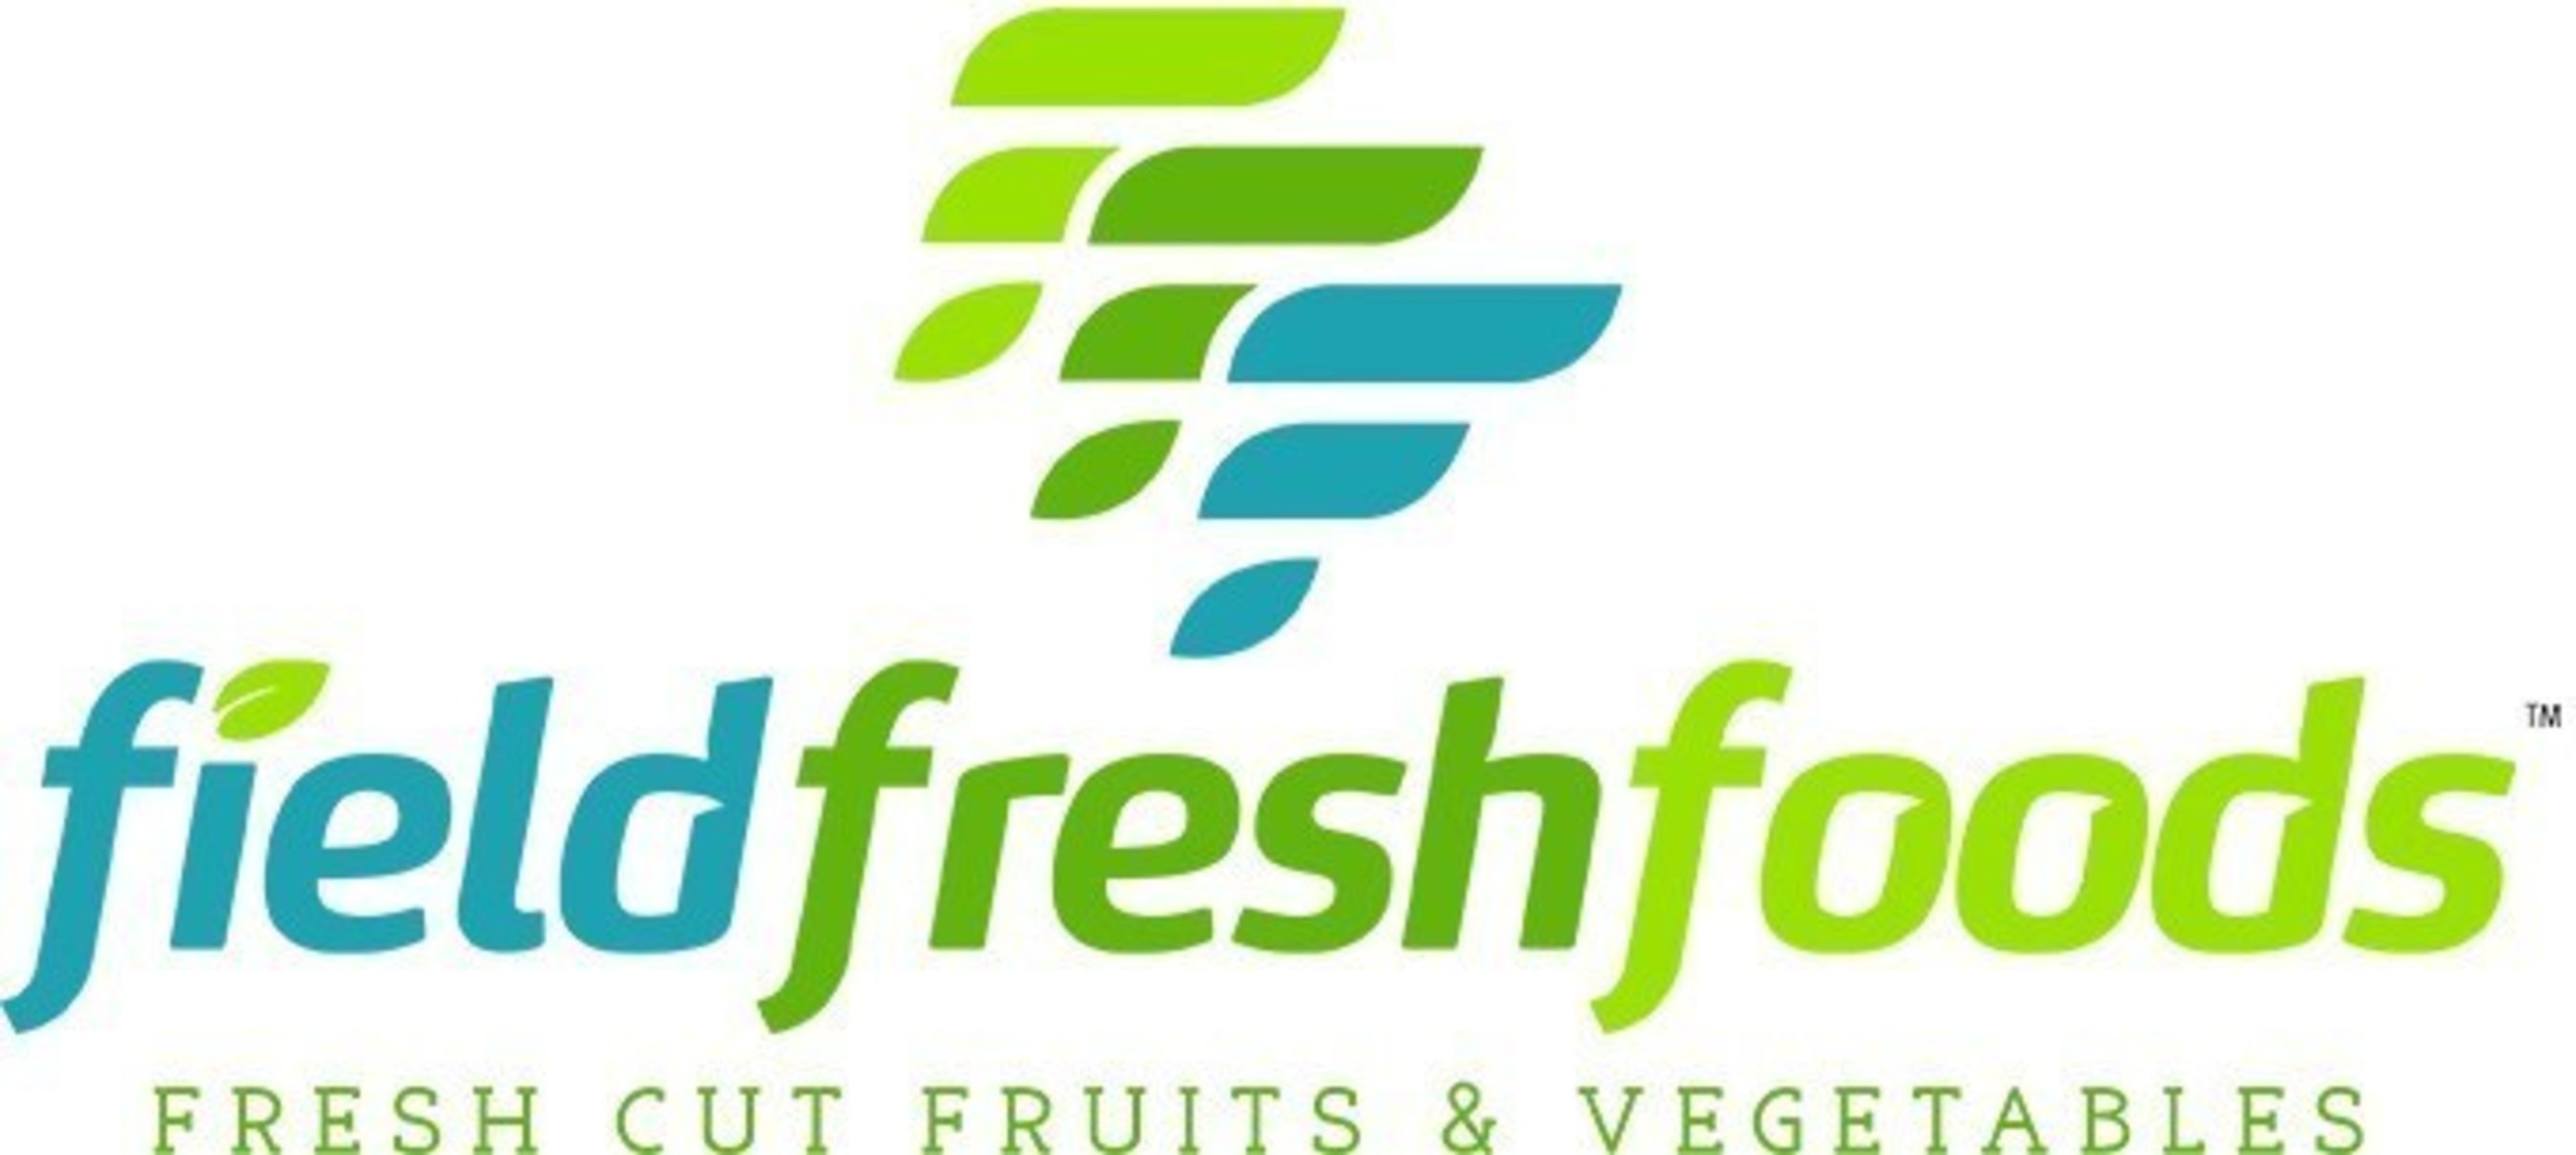 Field Fresh Foods New Logo